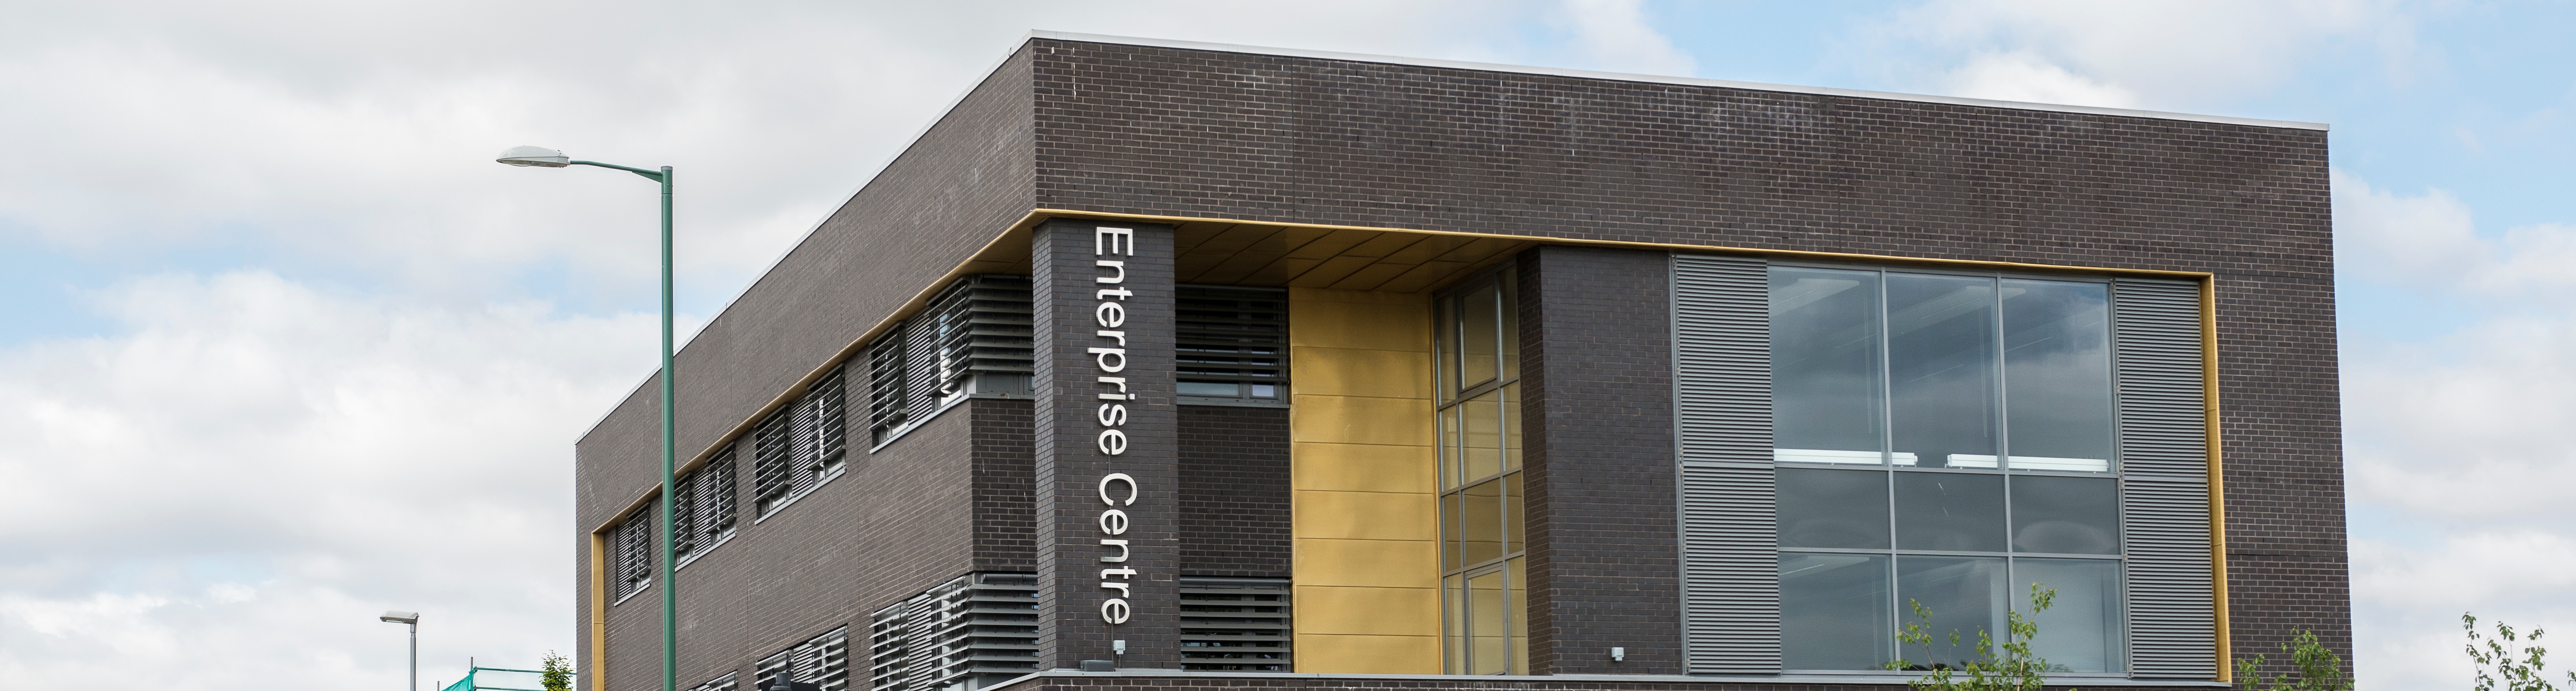 Enterprise Centre Header Image